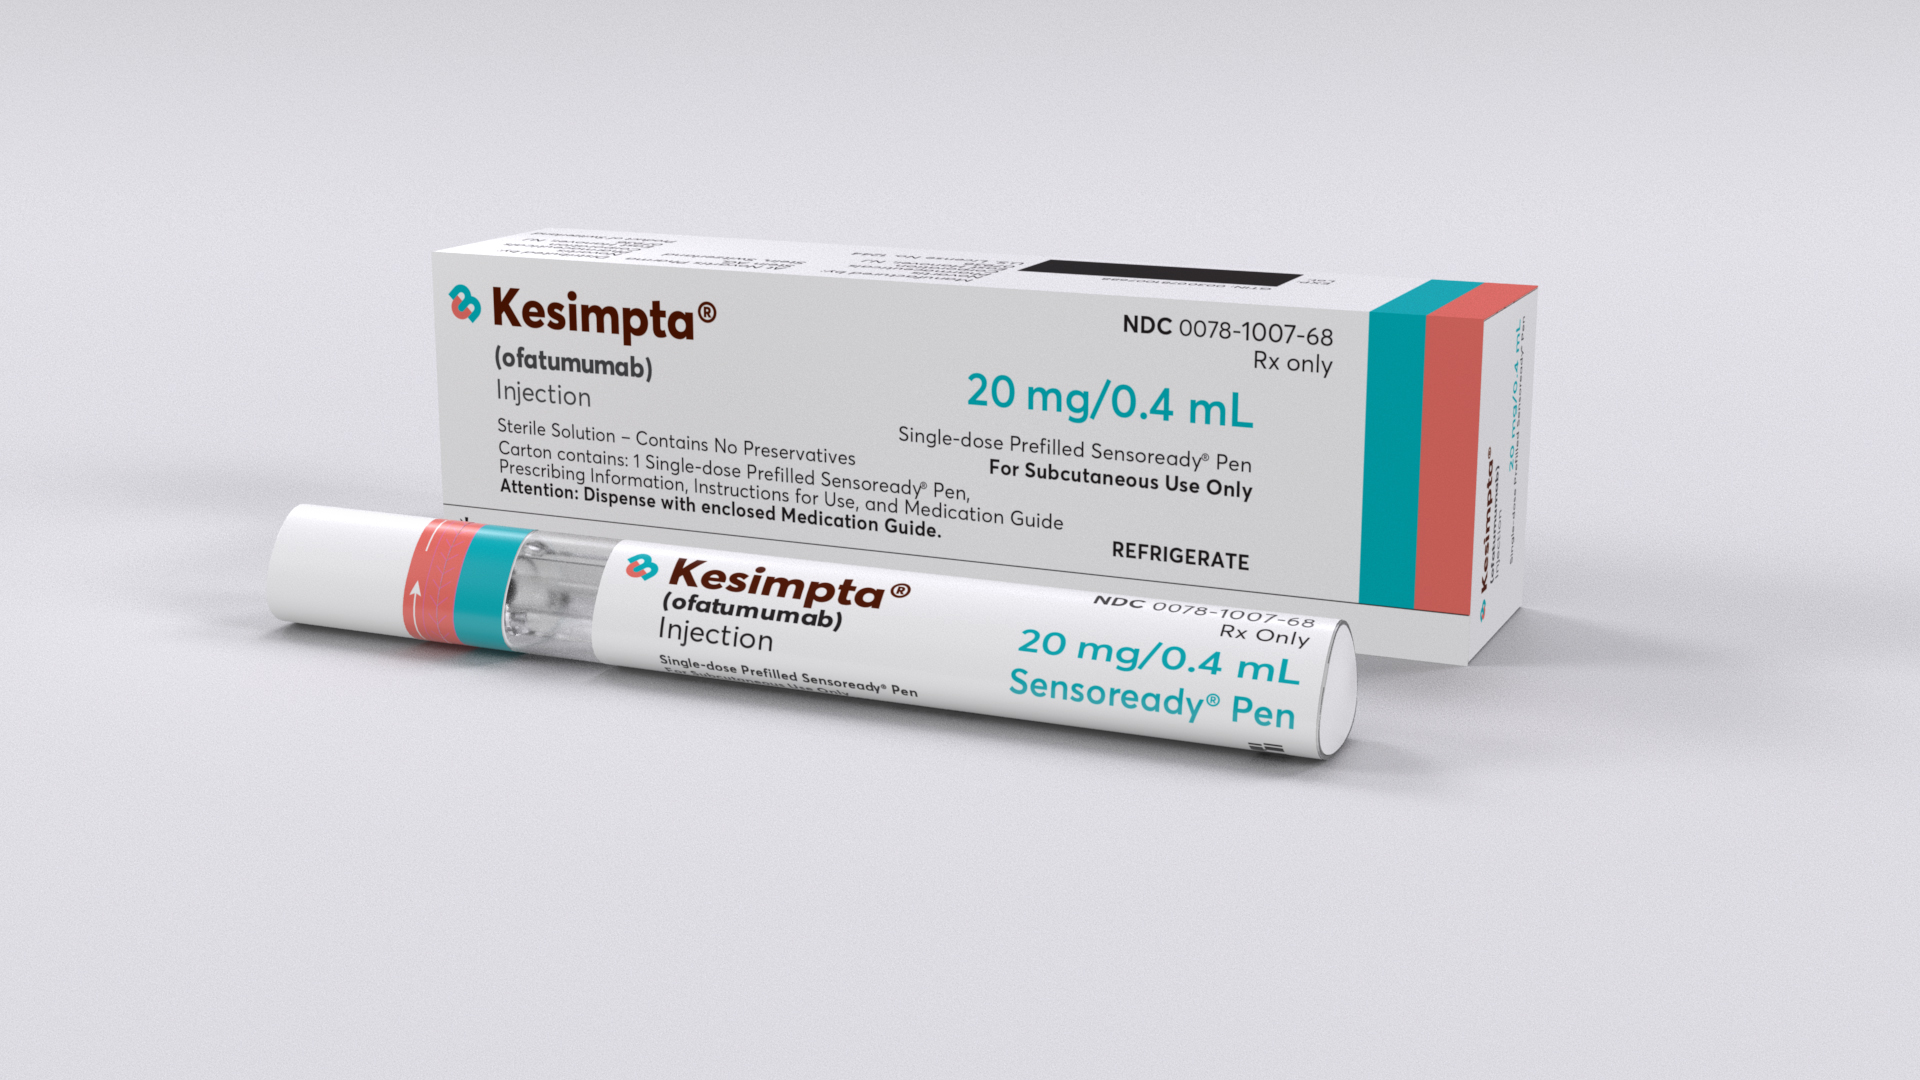 KESIMPTA Product and Packaging